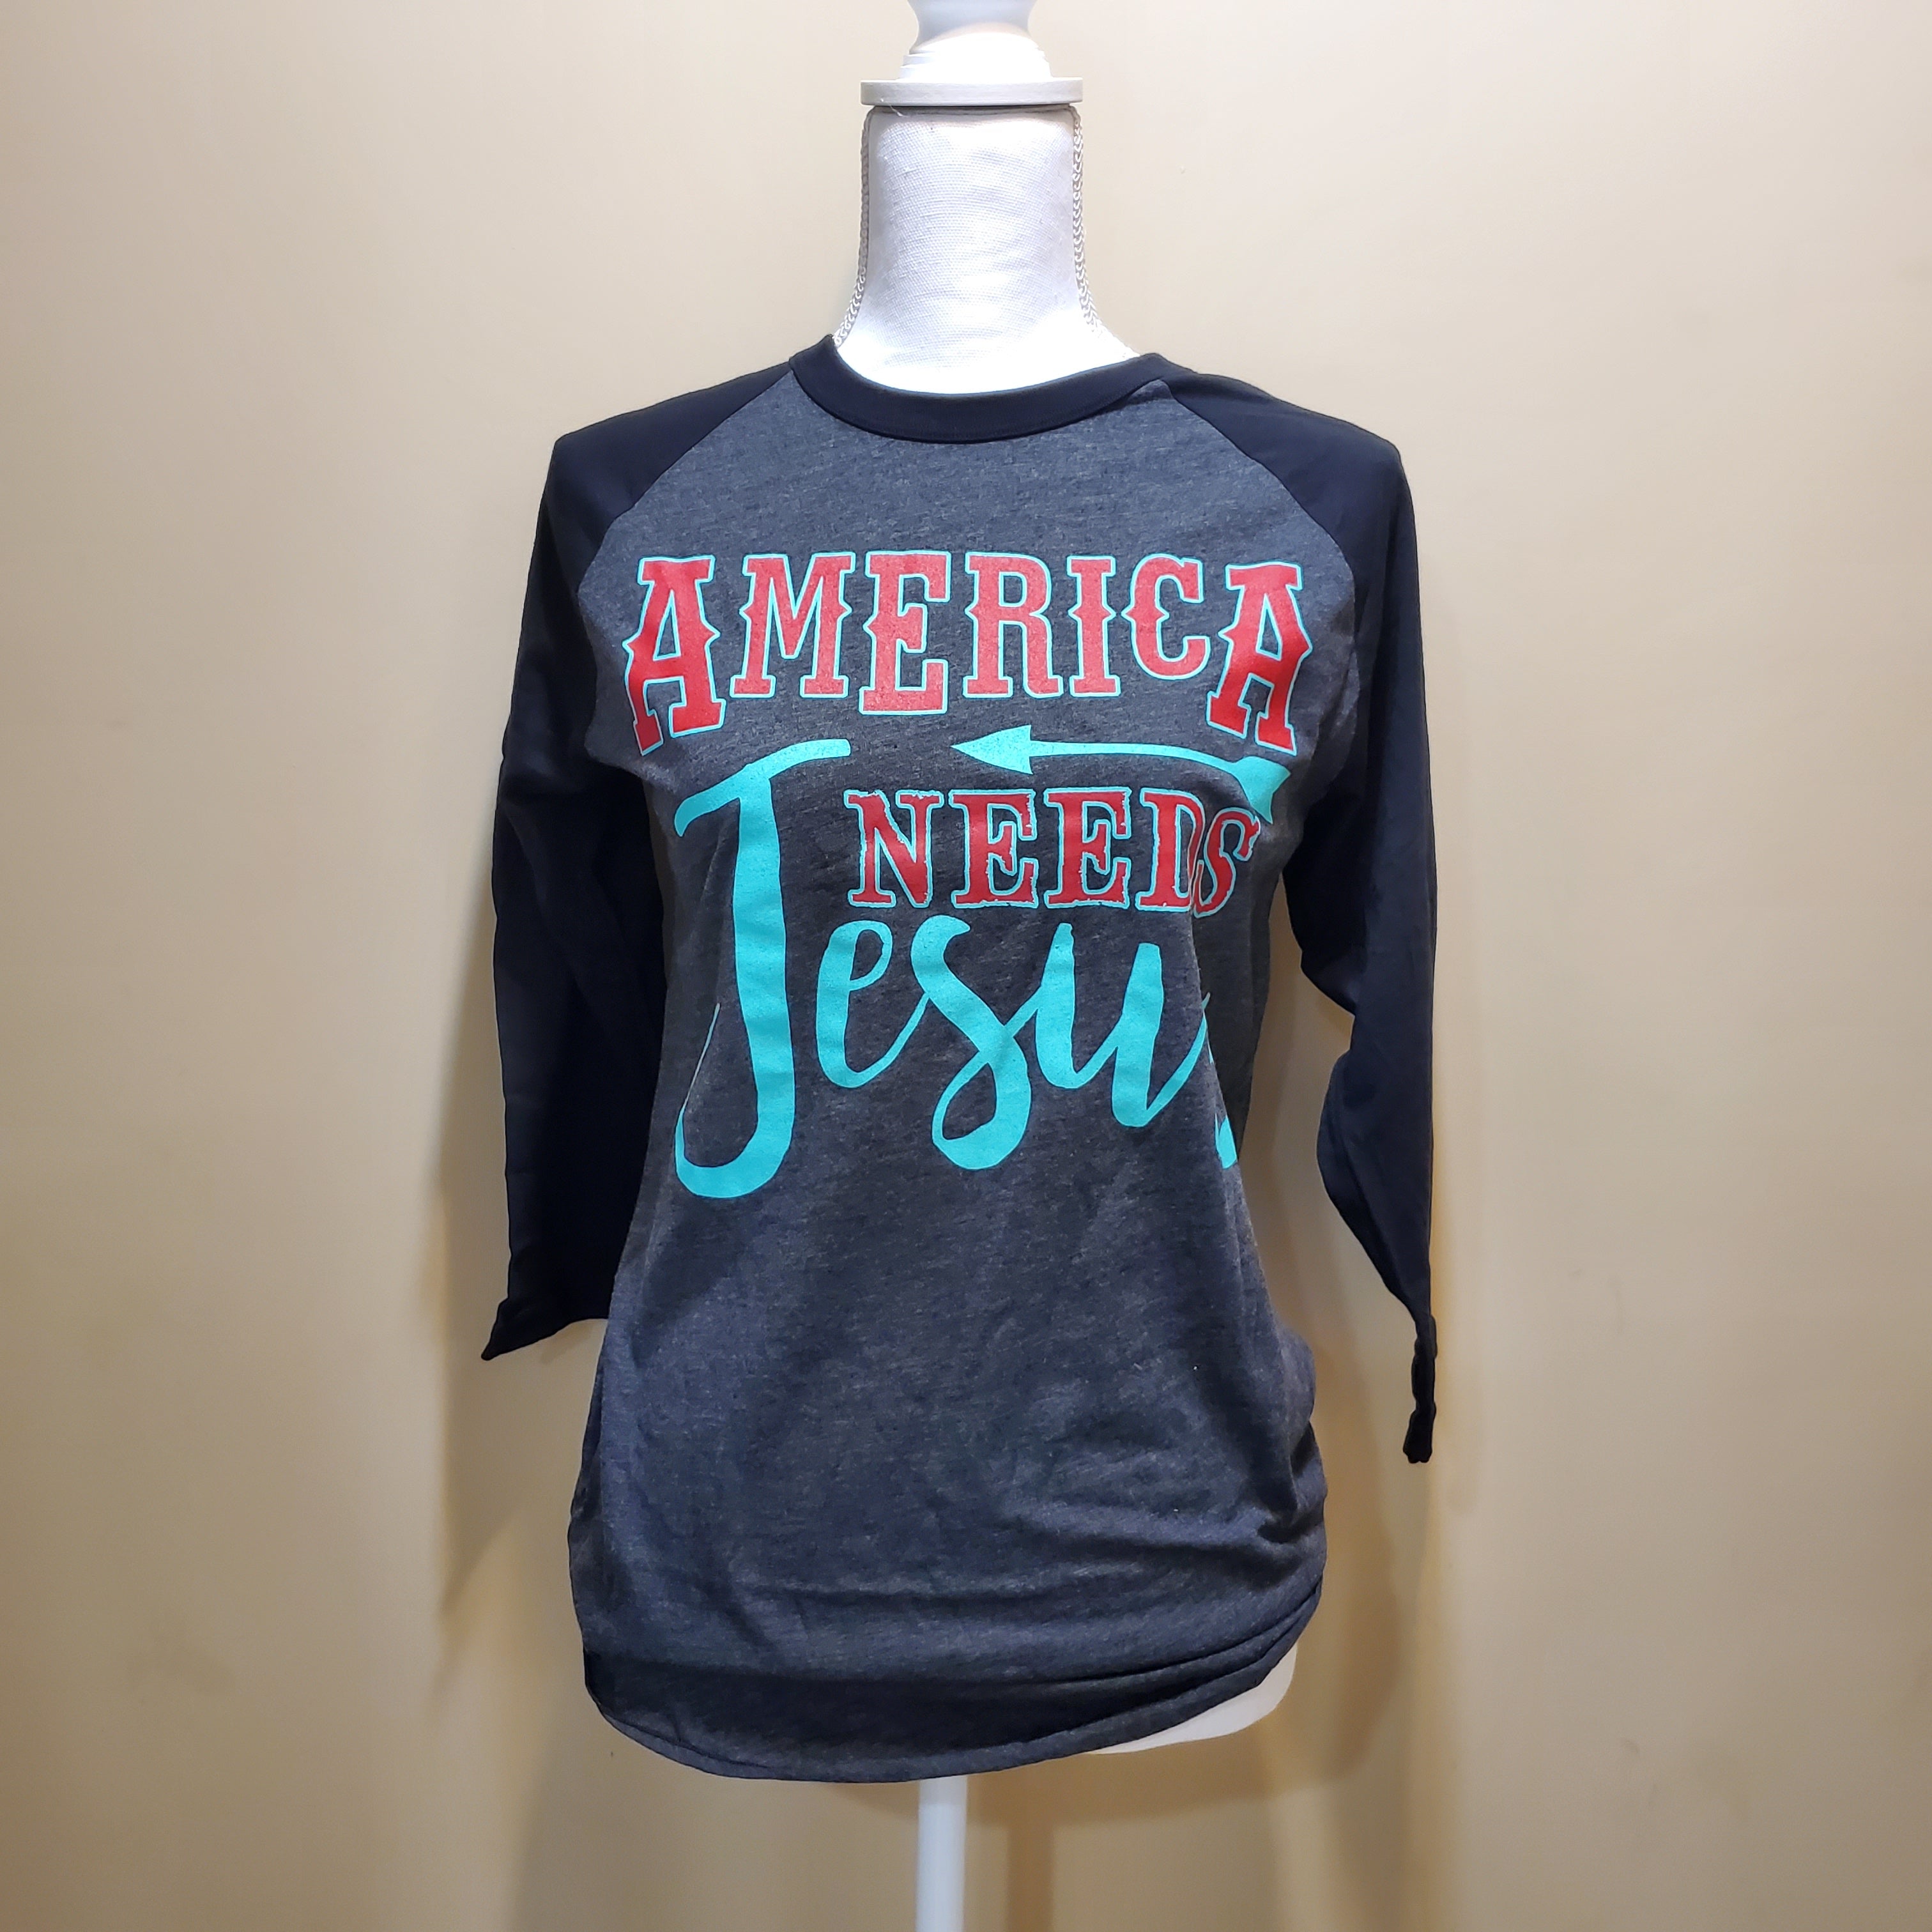 America Needs Jesus *Bball*